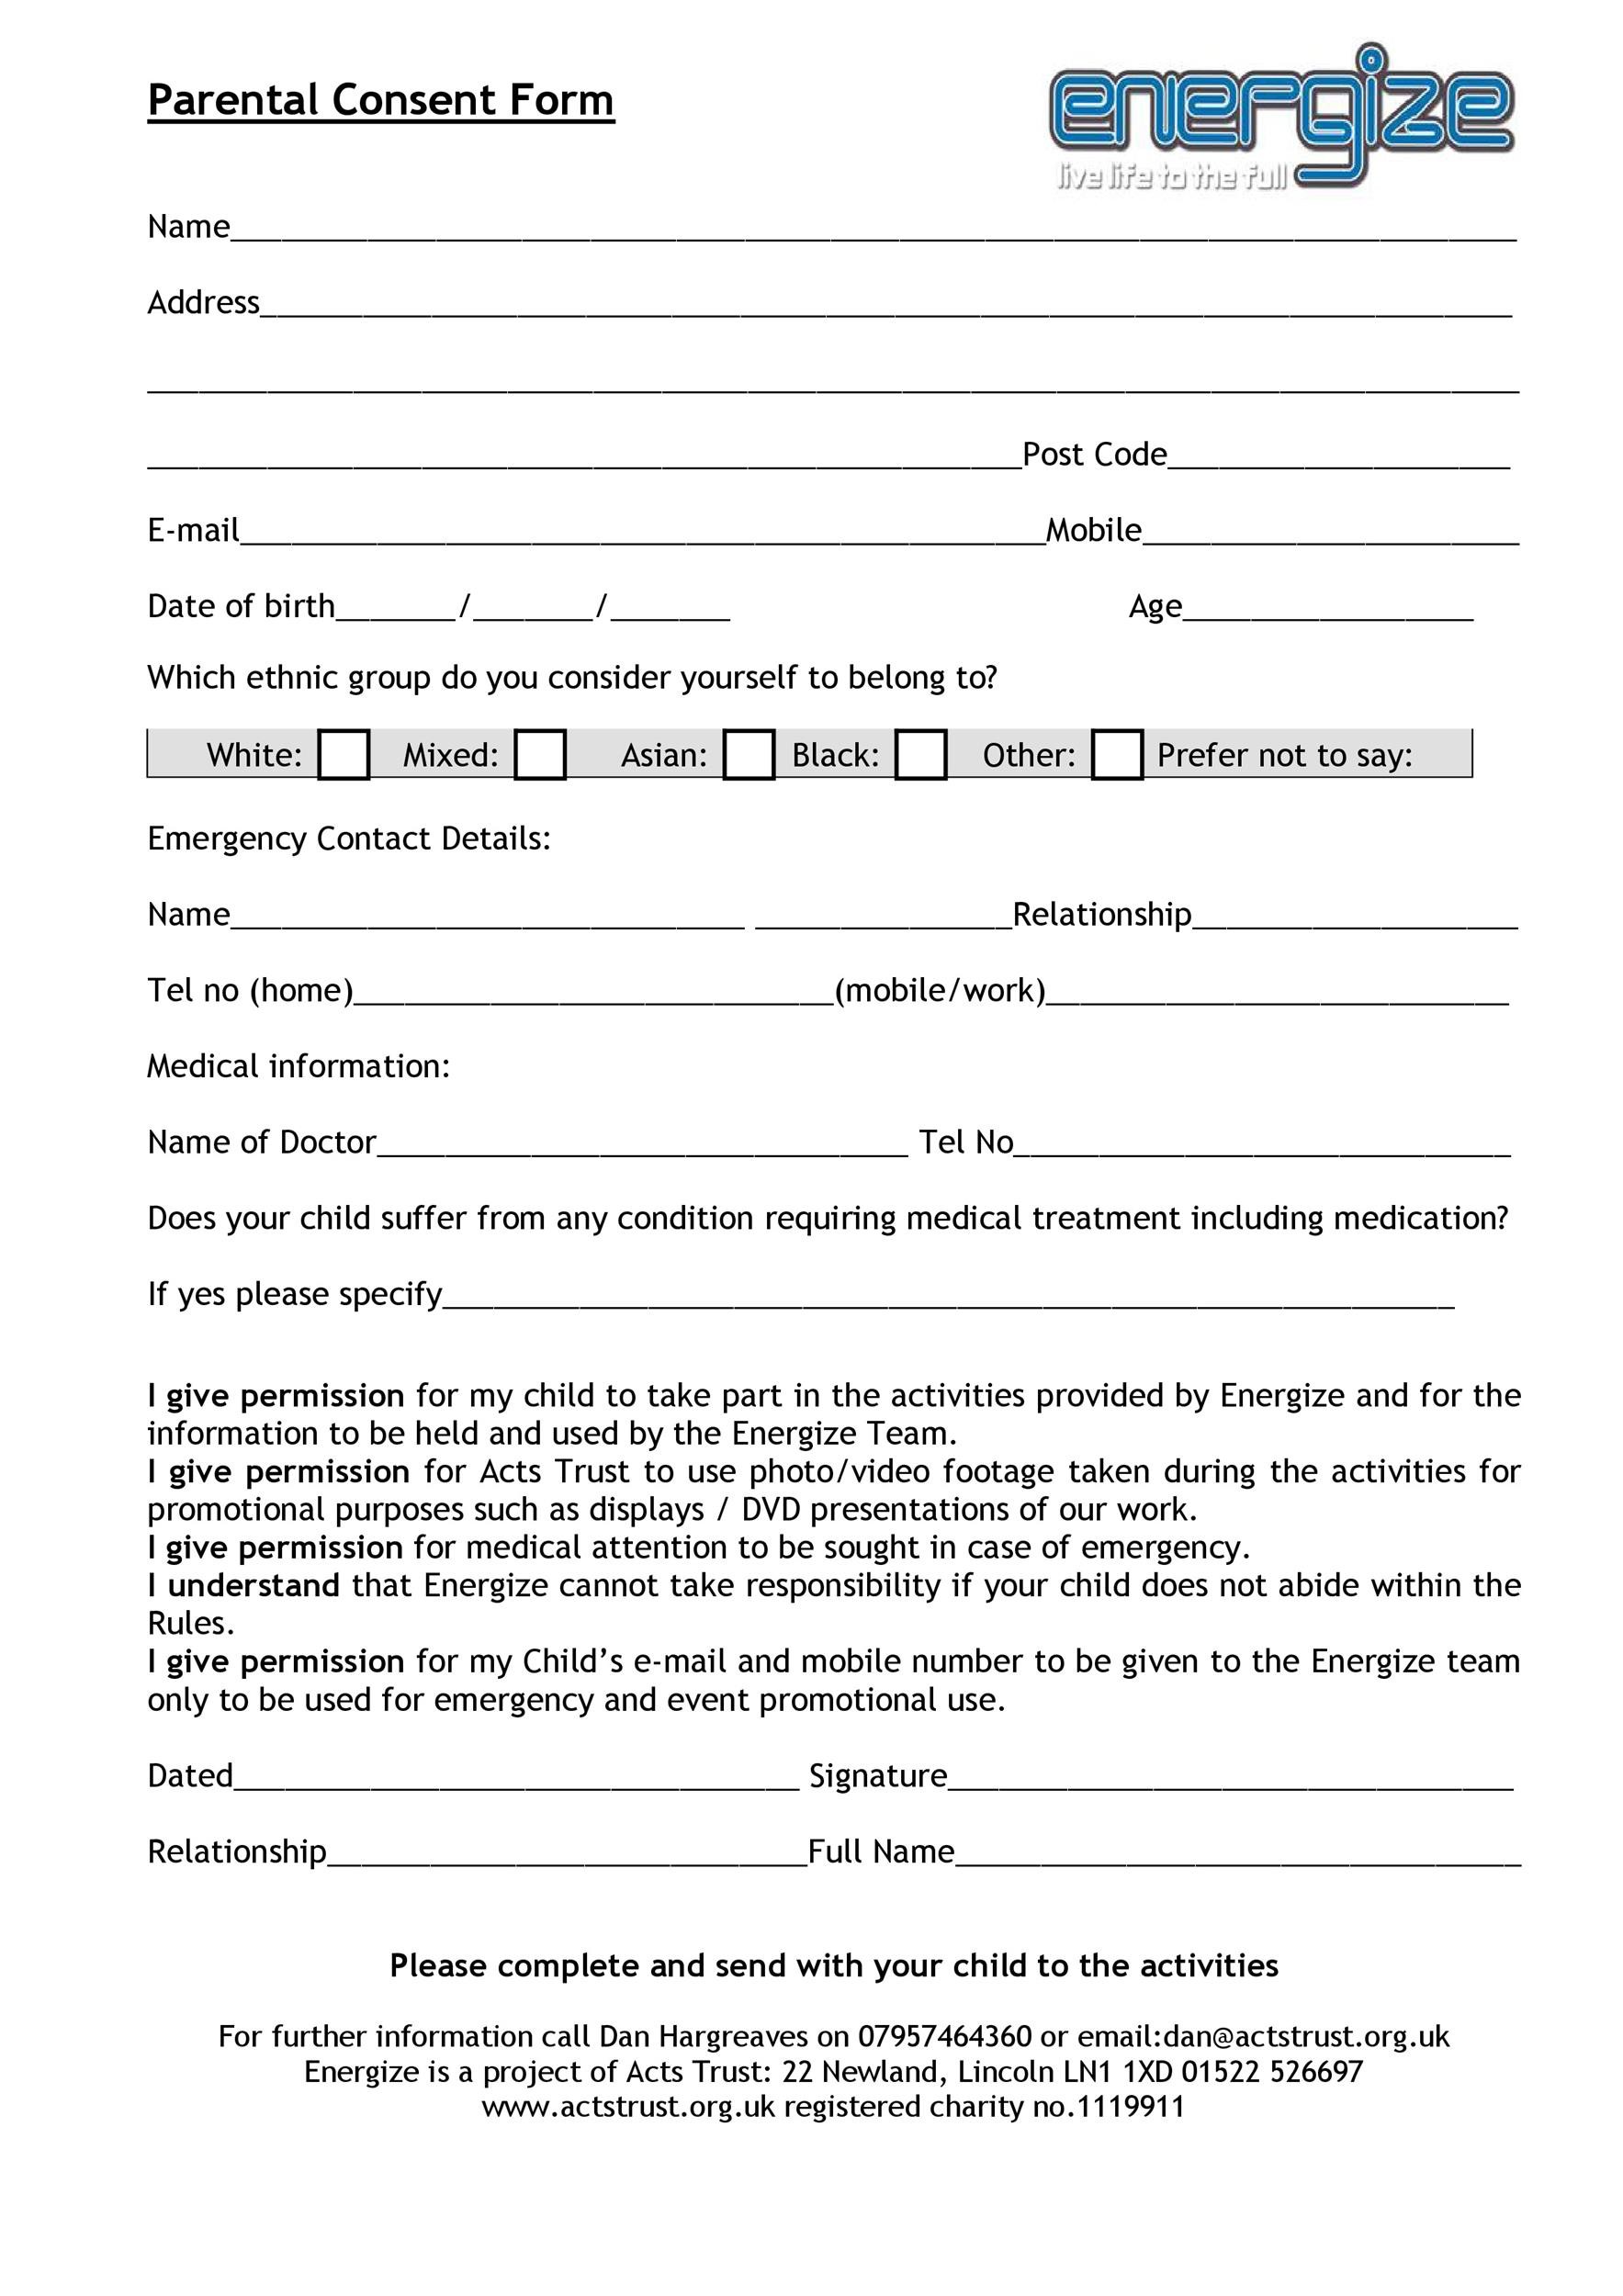 Parental Consent/Permission Letter Sample from templatelab.com